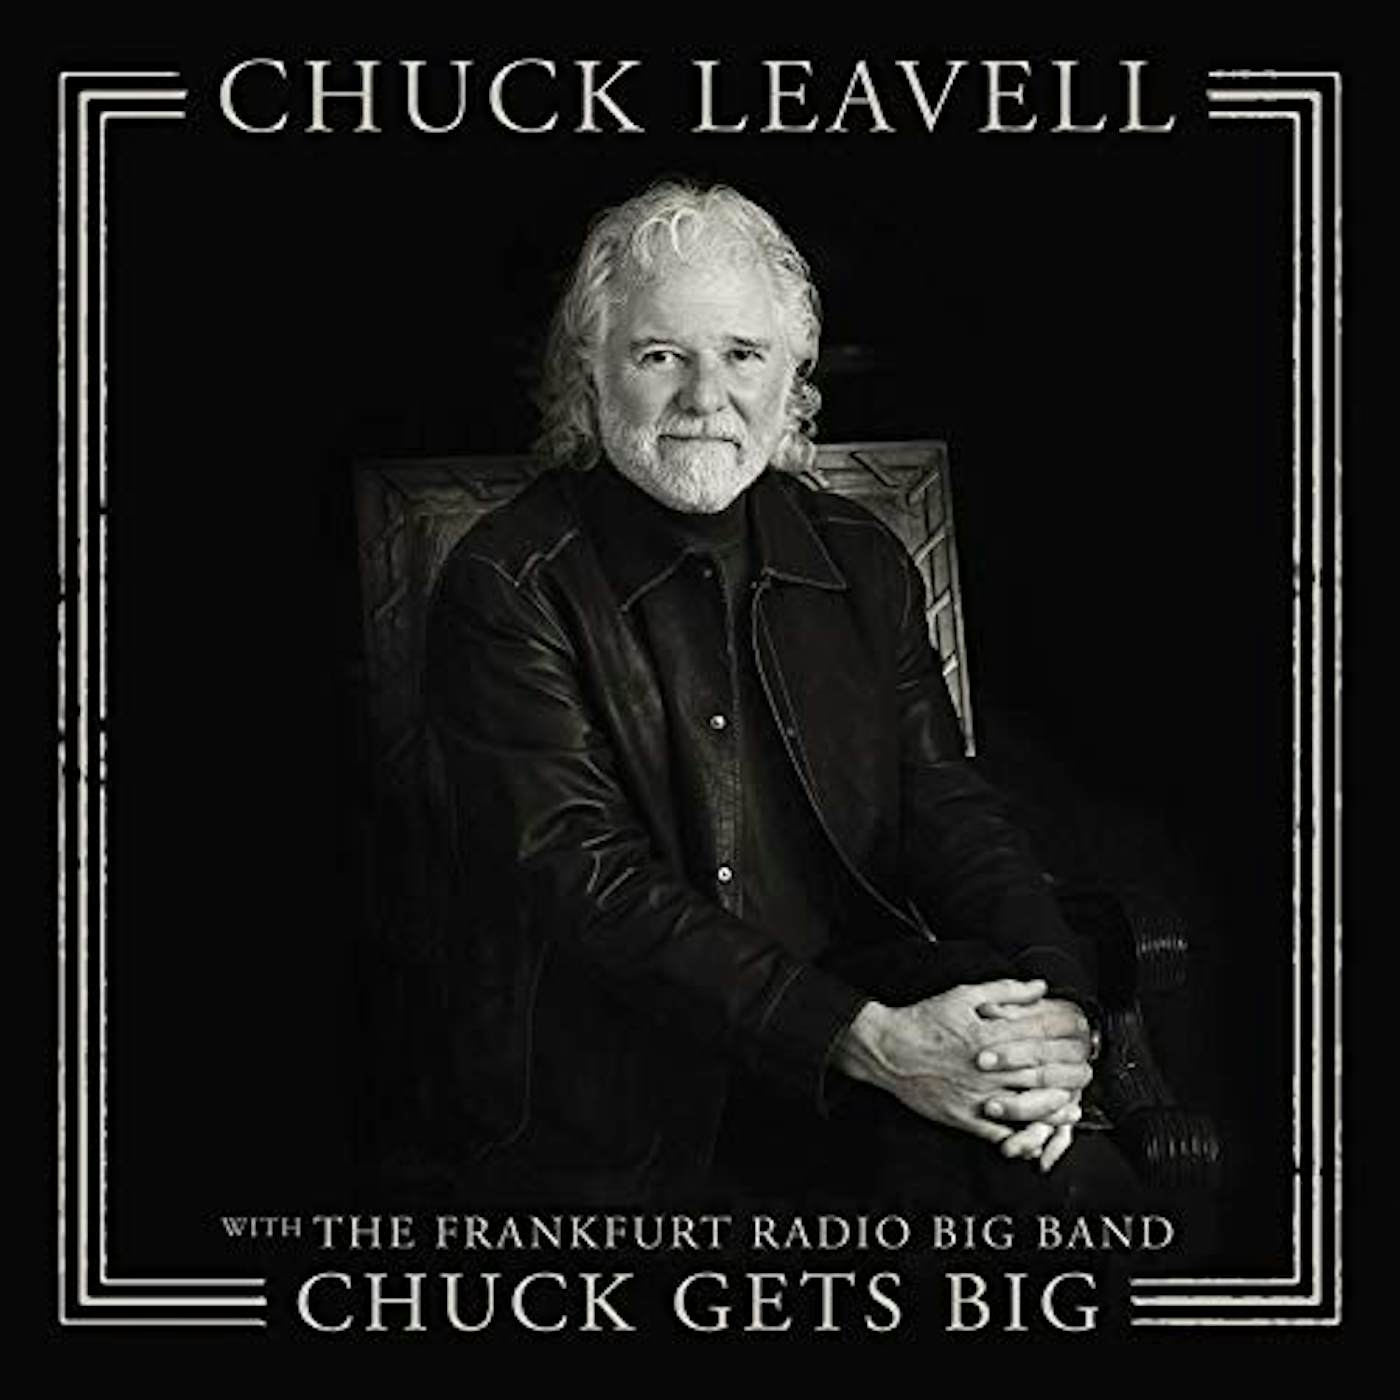 Chuck Leavell CHUCK GETS BIG (WITH THE FRANKFURT RADIO BIG BAND) Vinyl Record